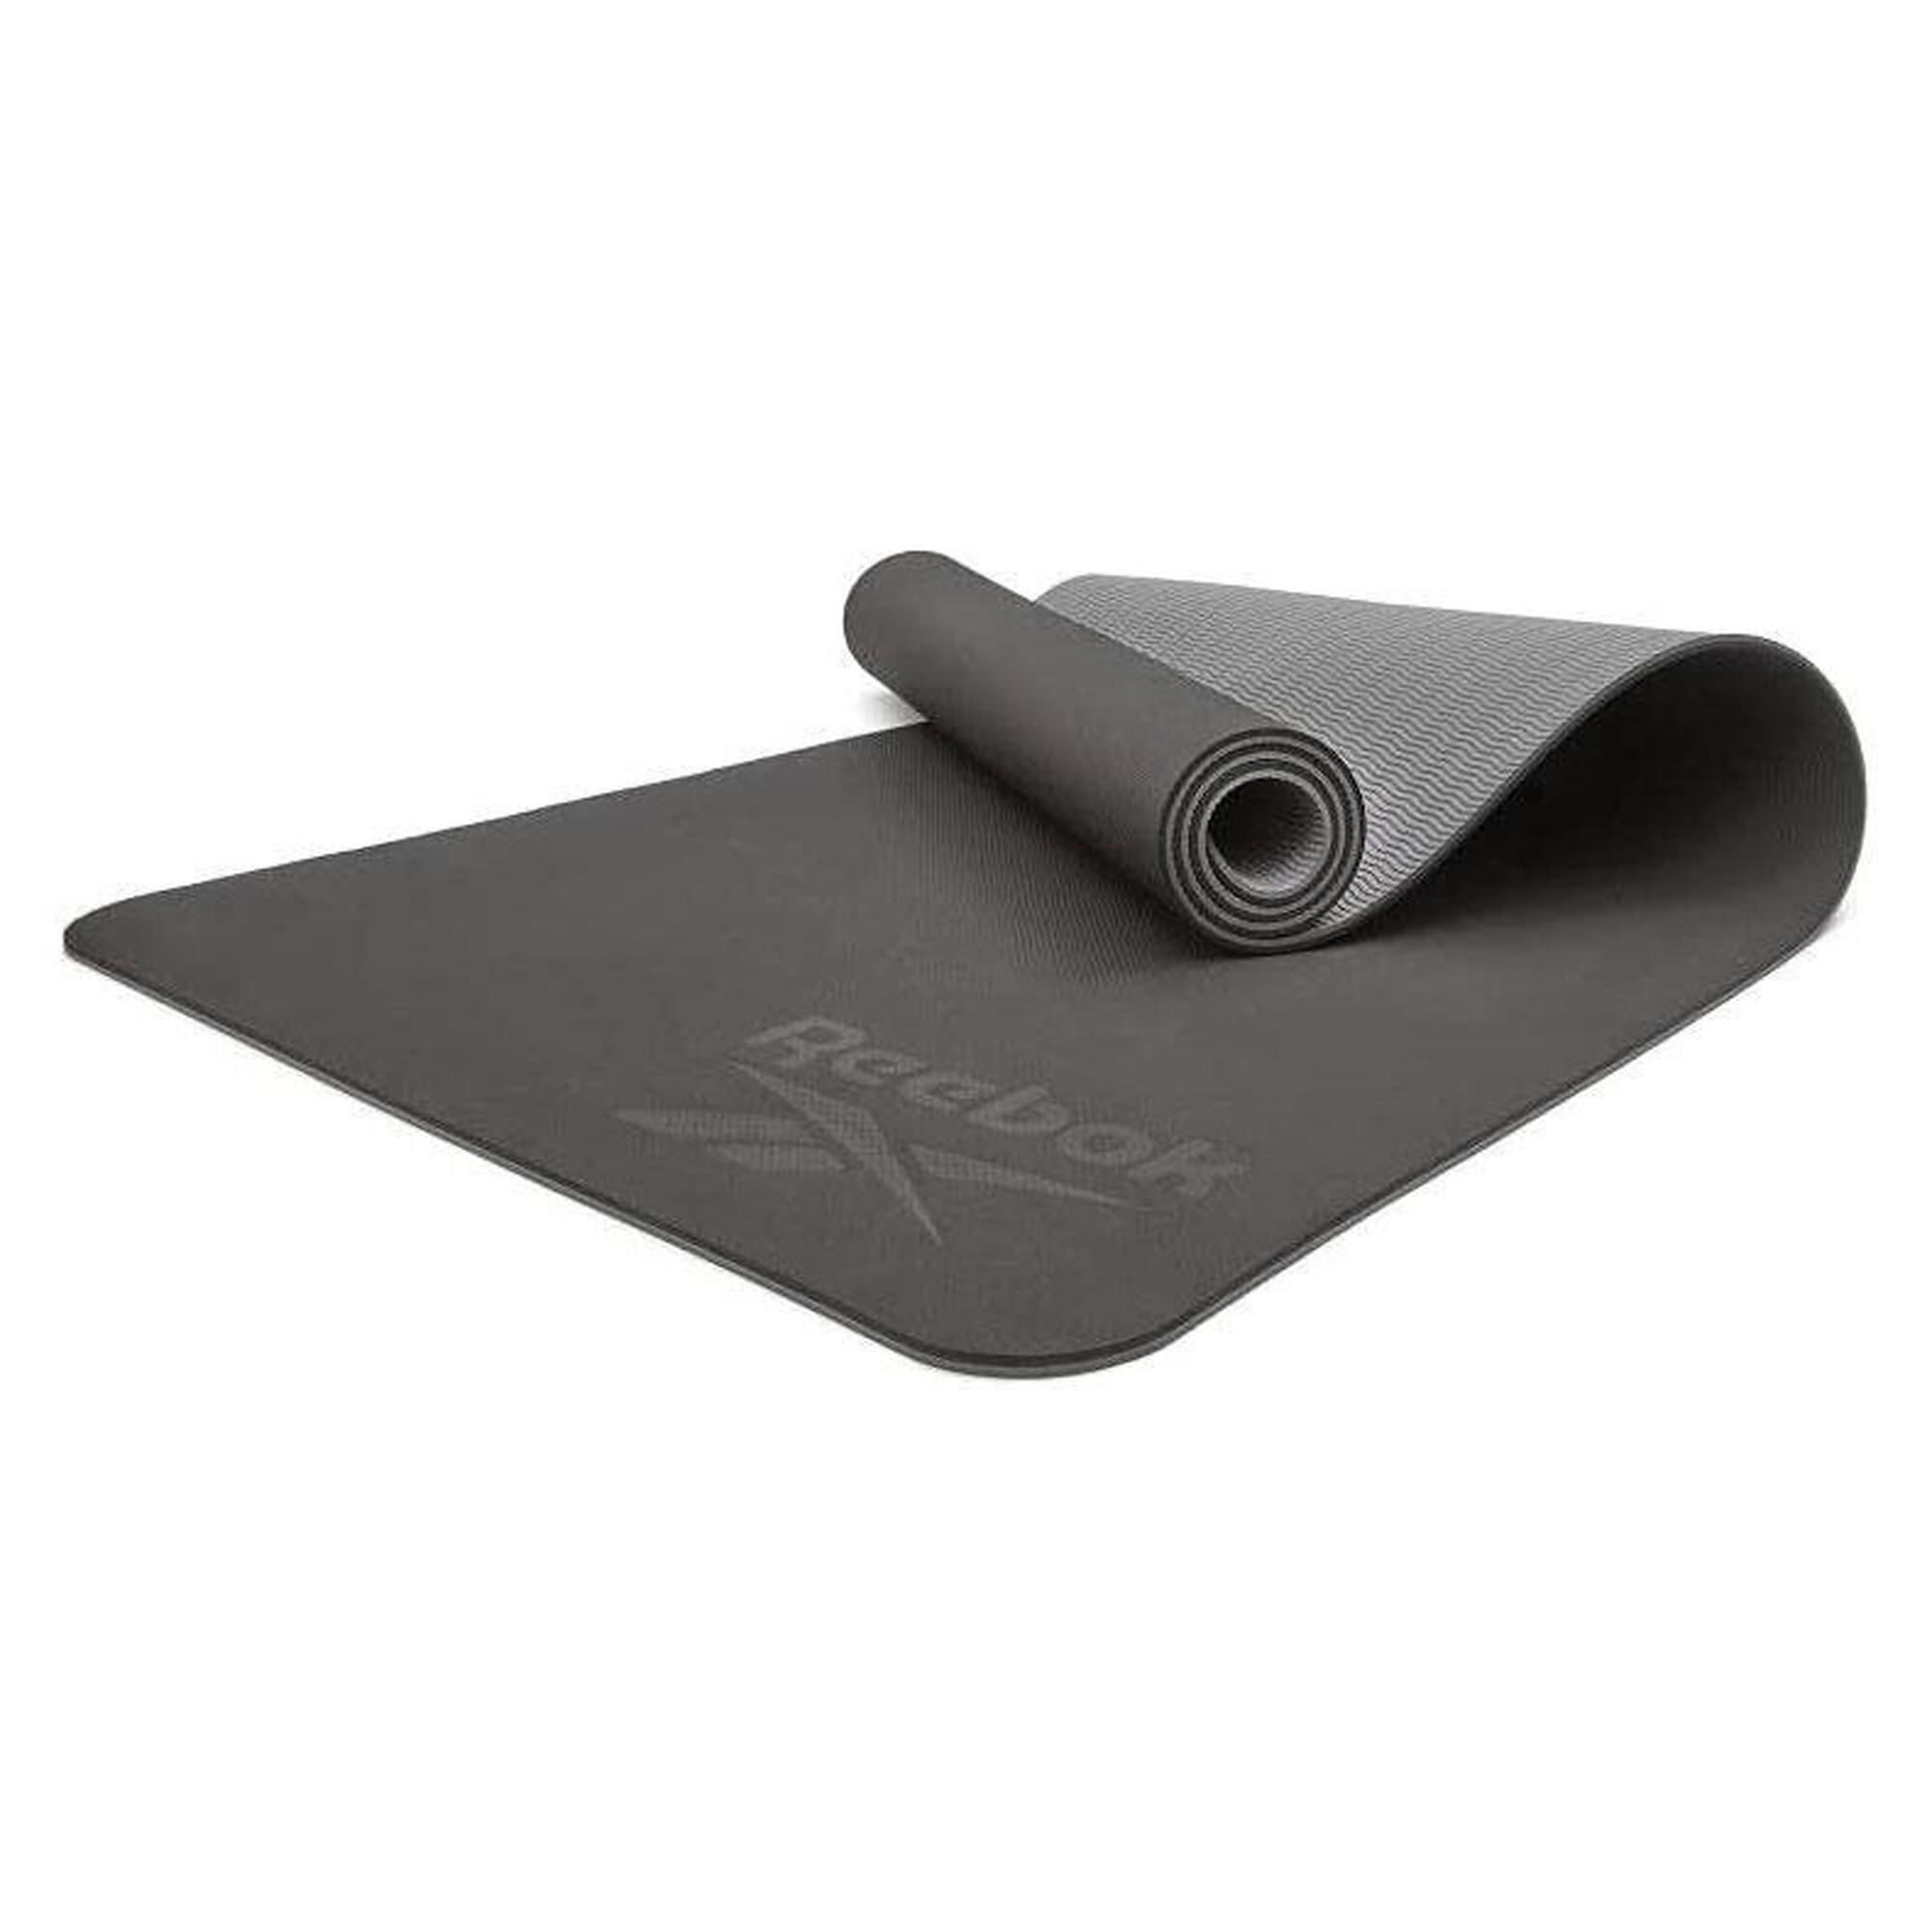 Reebok Yogamatte Doppelseitige - 6mm - Schwarz/Grau